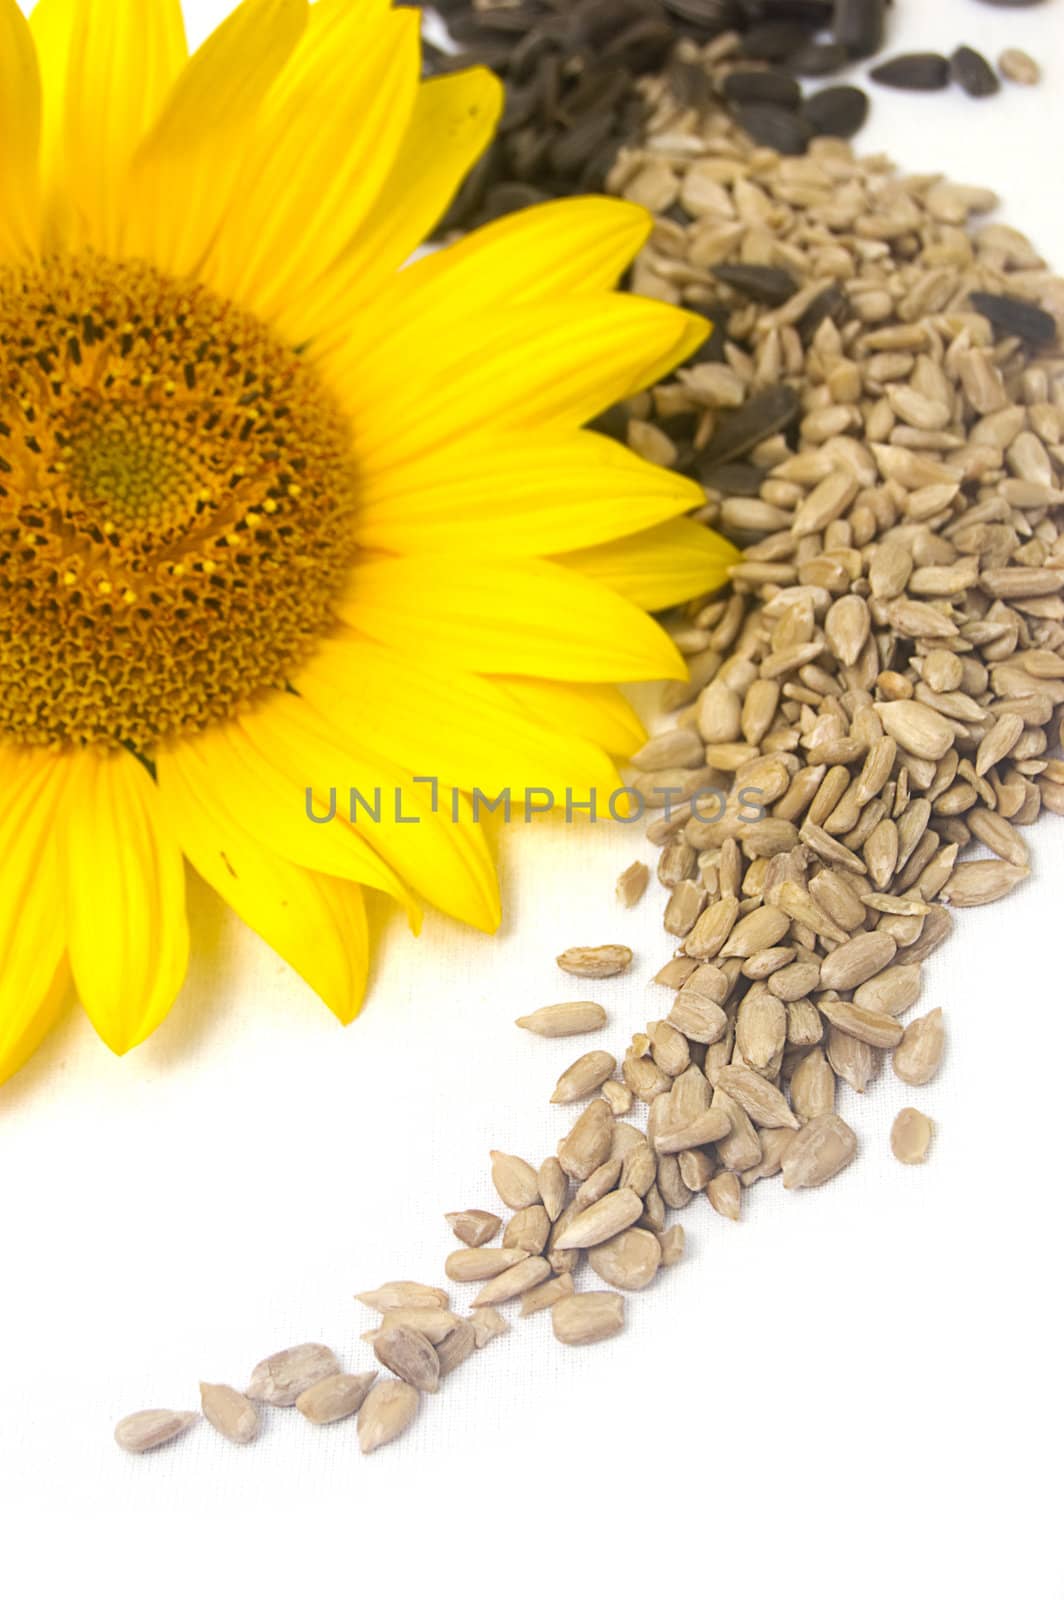 Sunflower, white kernels and black seeds